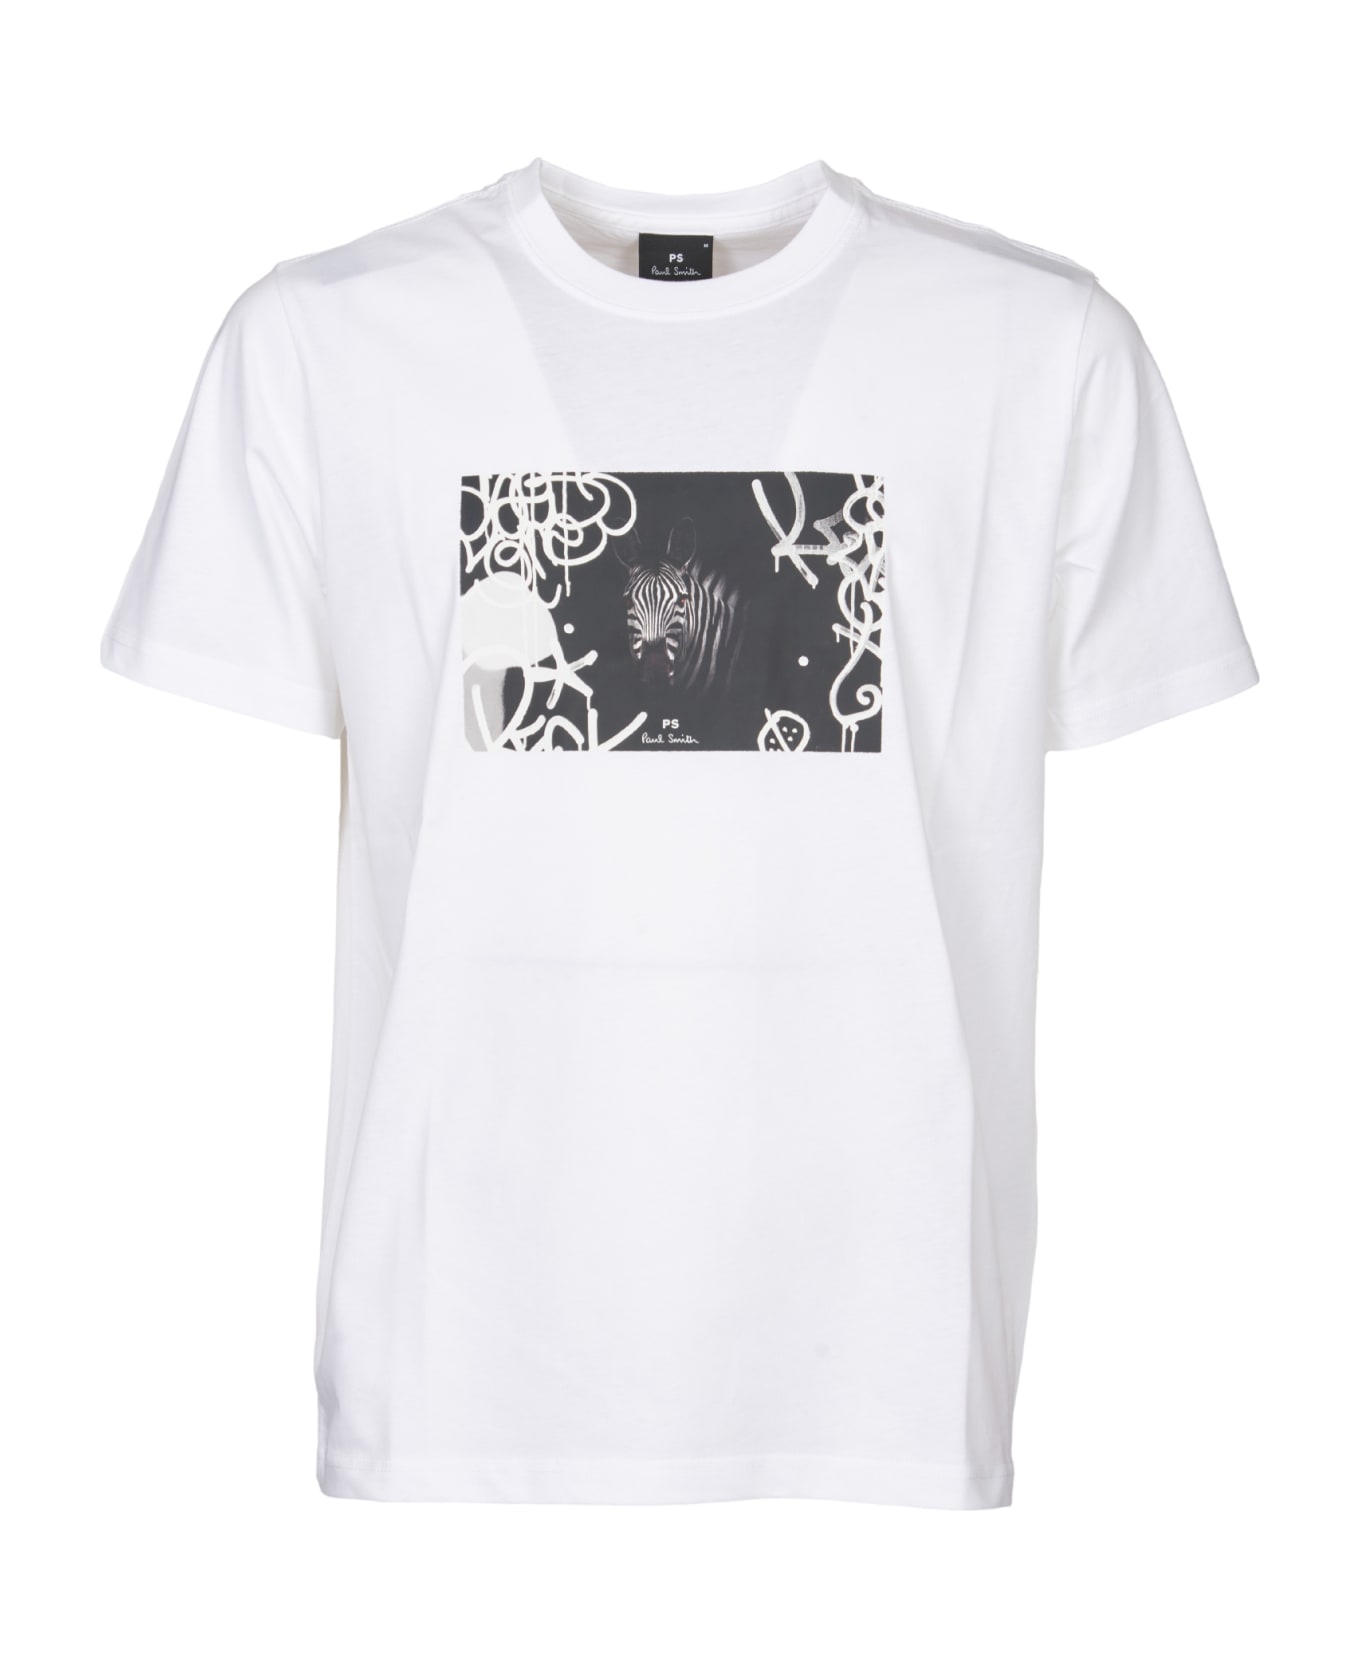 Paul Smith T-shirt - White シャツ